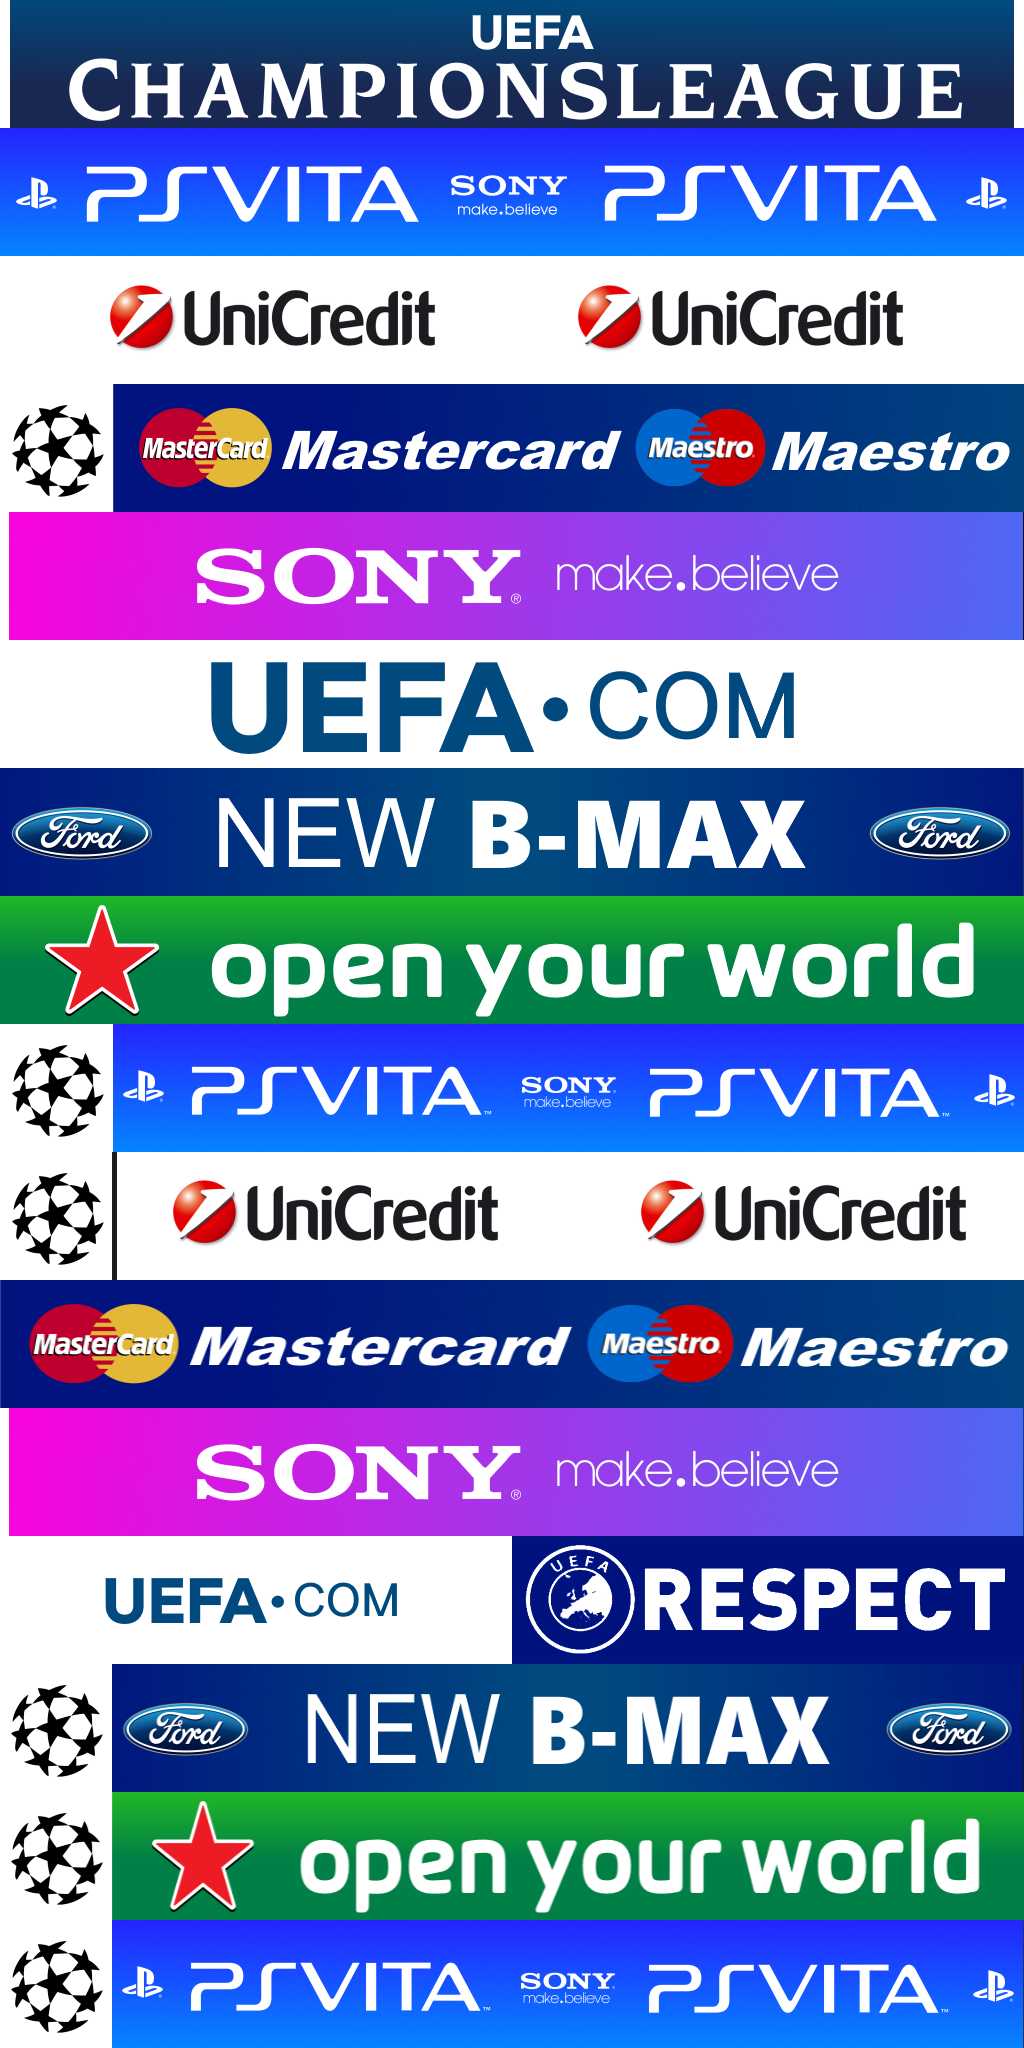 UEFA_CL_ADBOARDS_2012.png